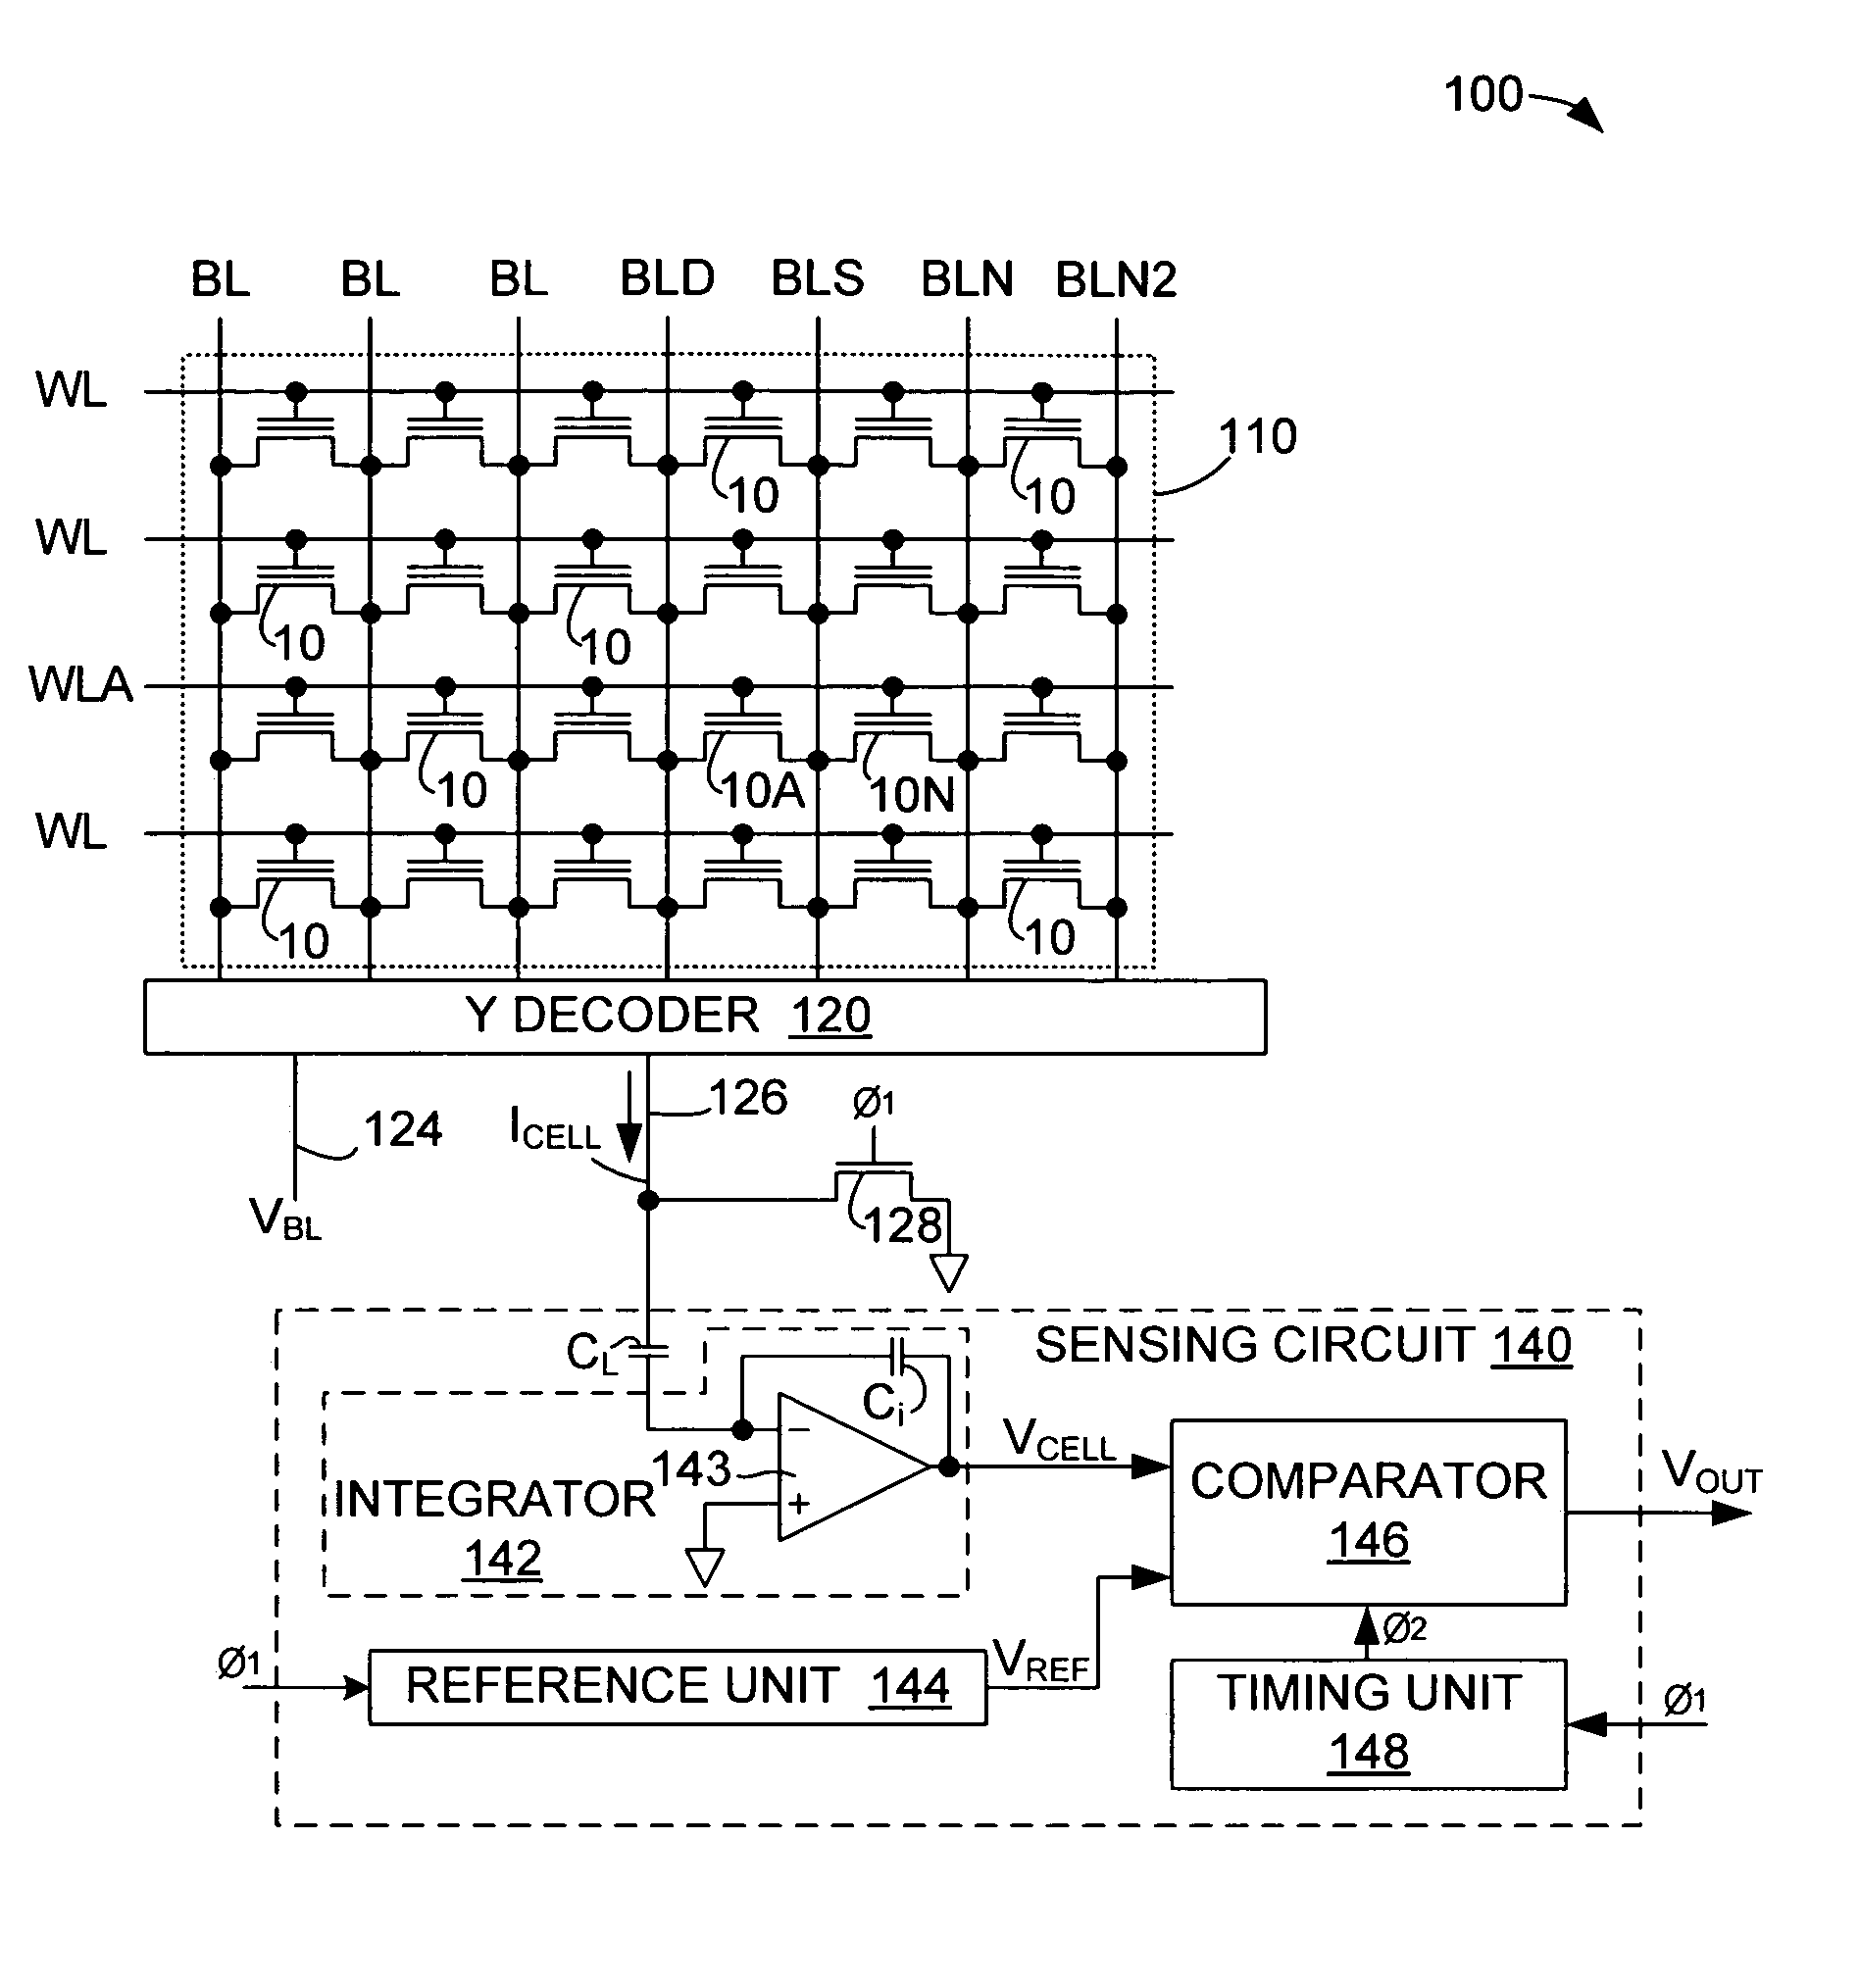 Integrator-based current sensing circuit for reading memory cells